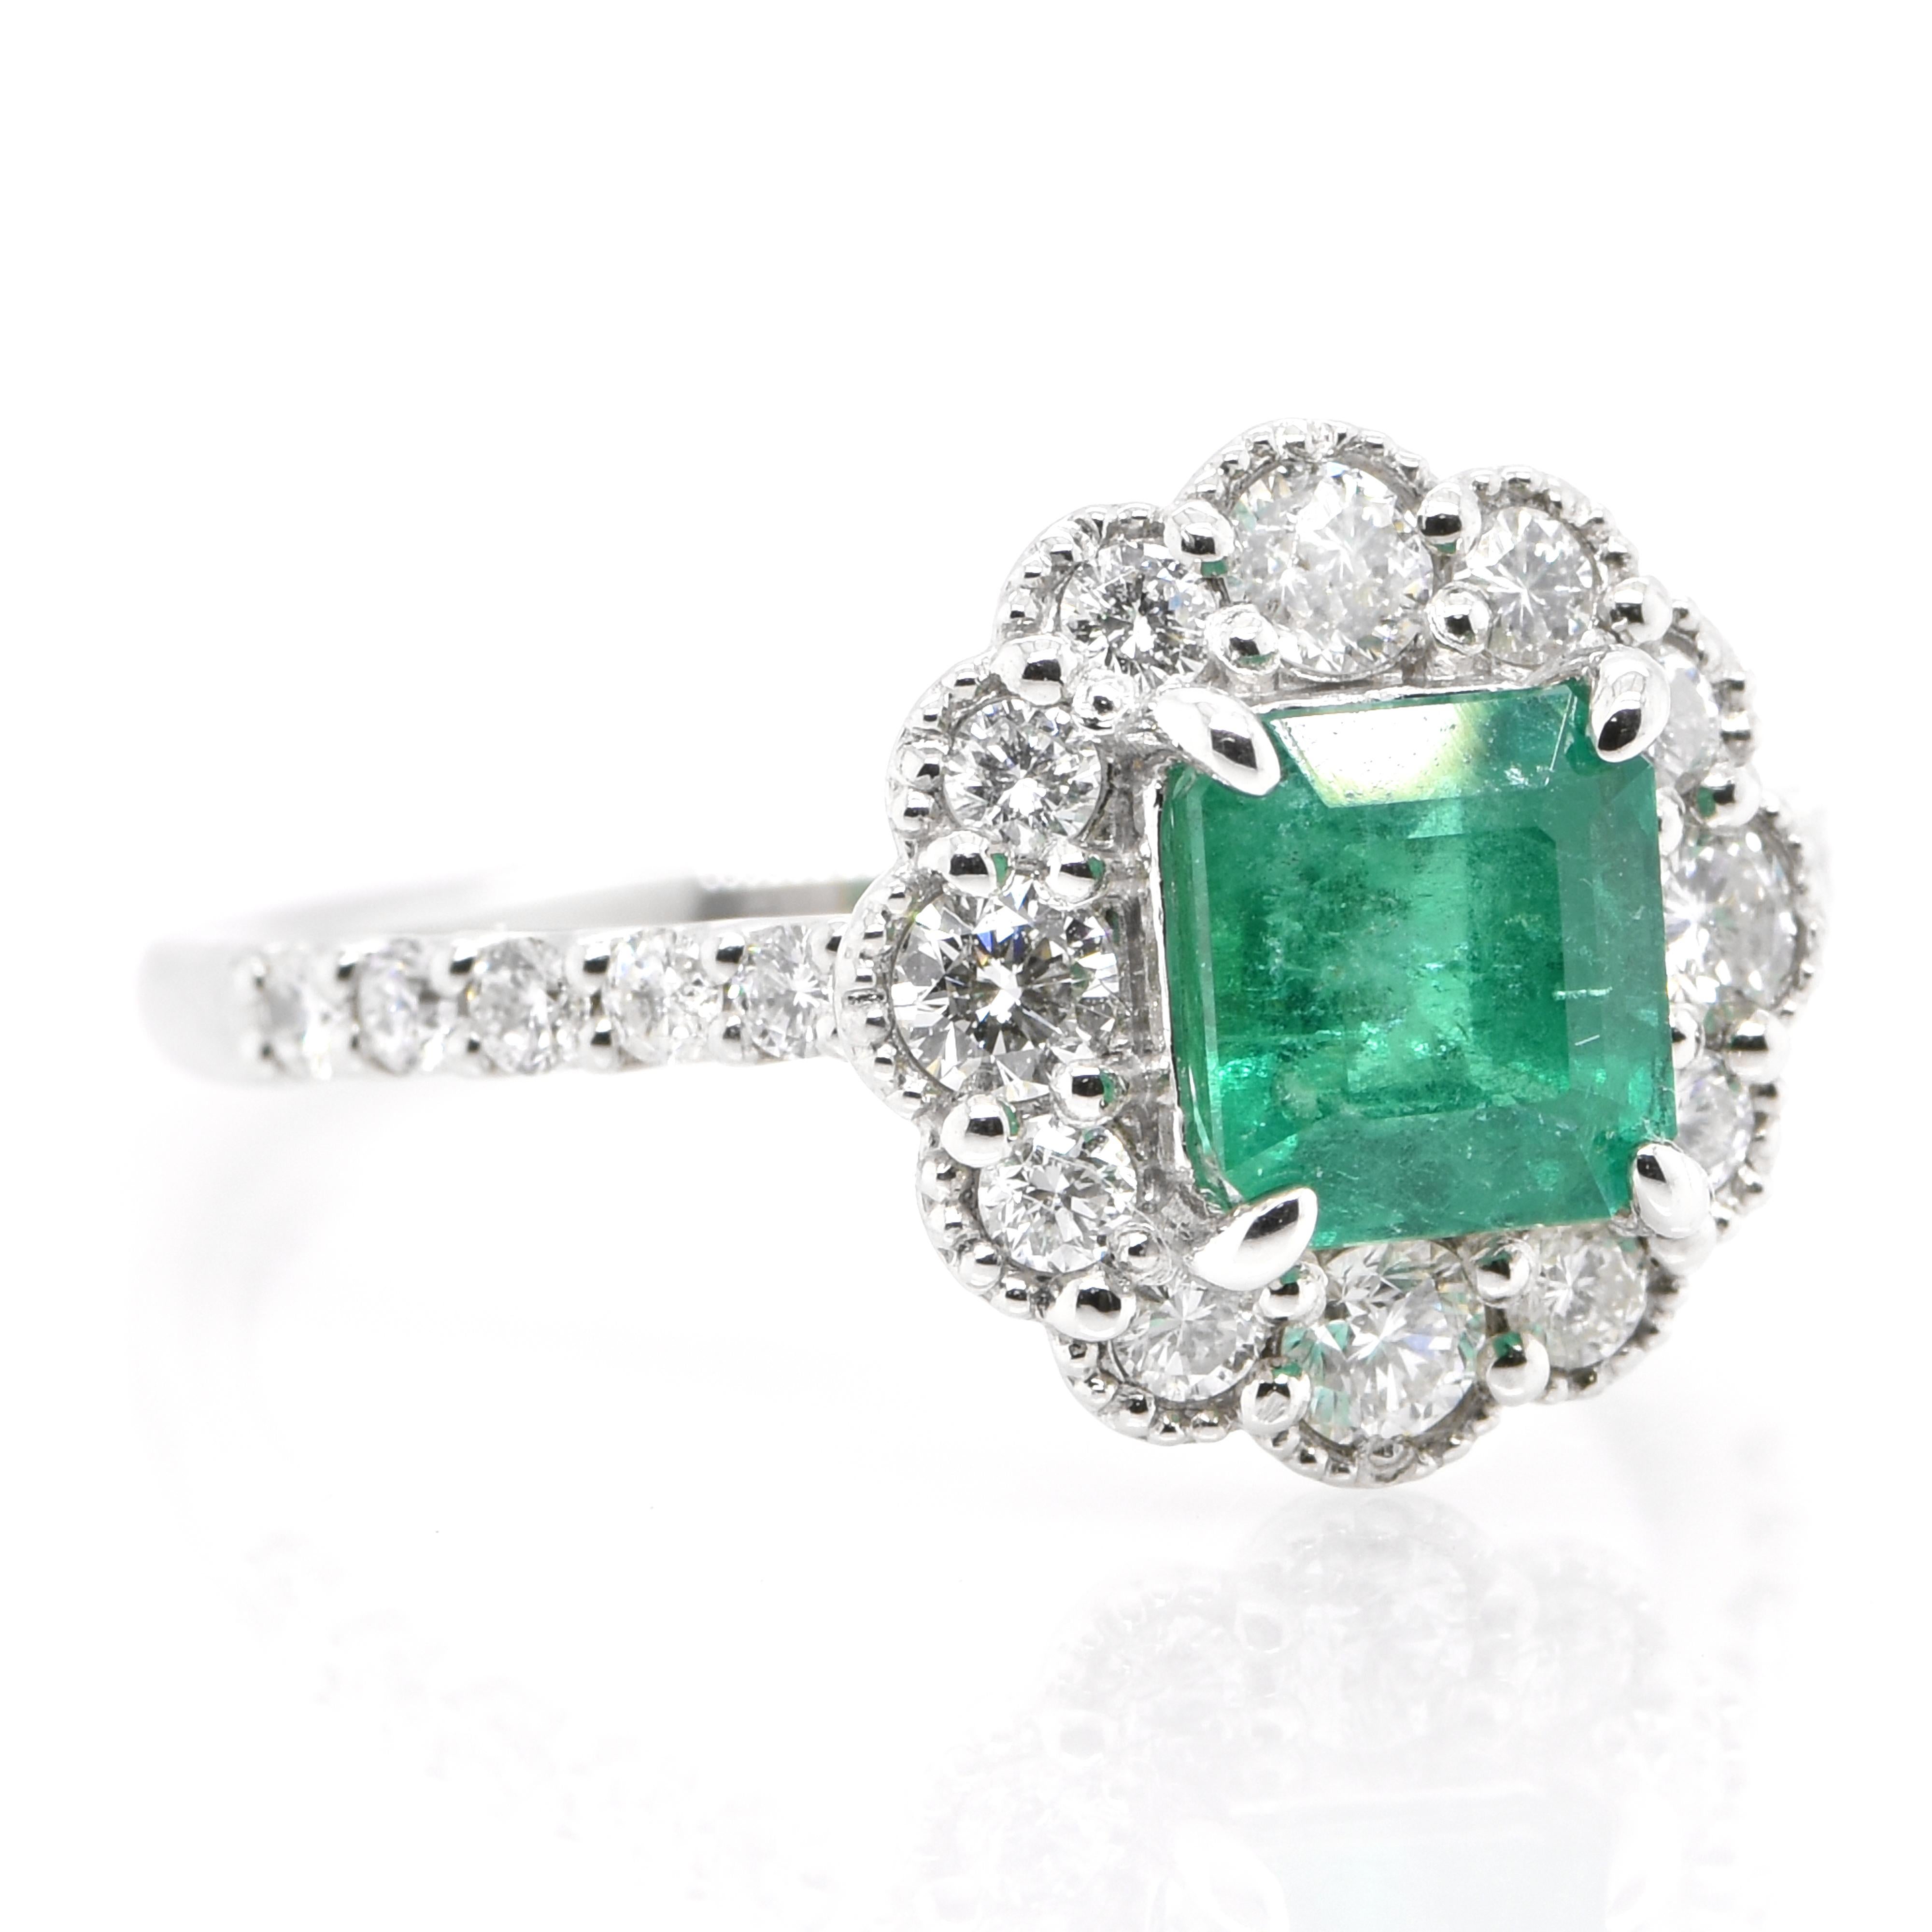 Modern 1.16 Carat Natural Emerald and Diamond Engagement Ring Set in Platinum